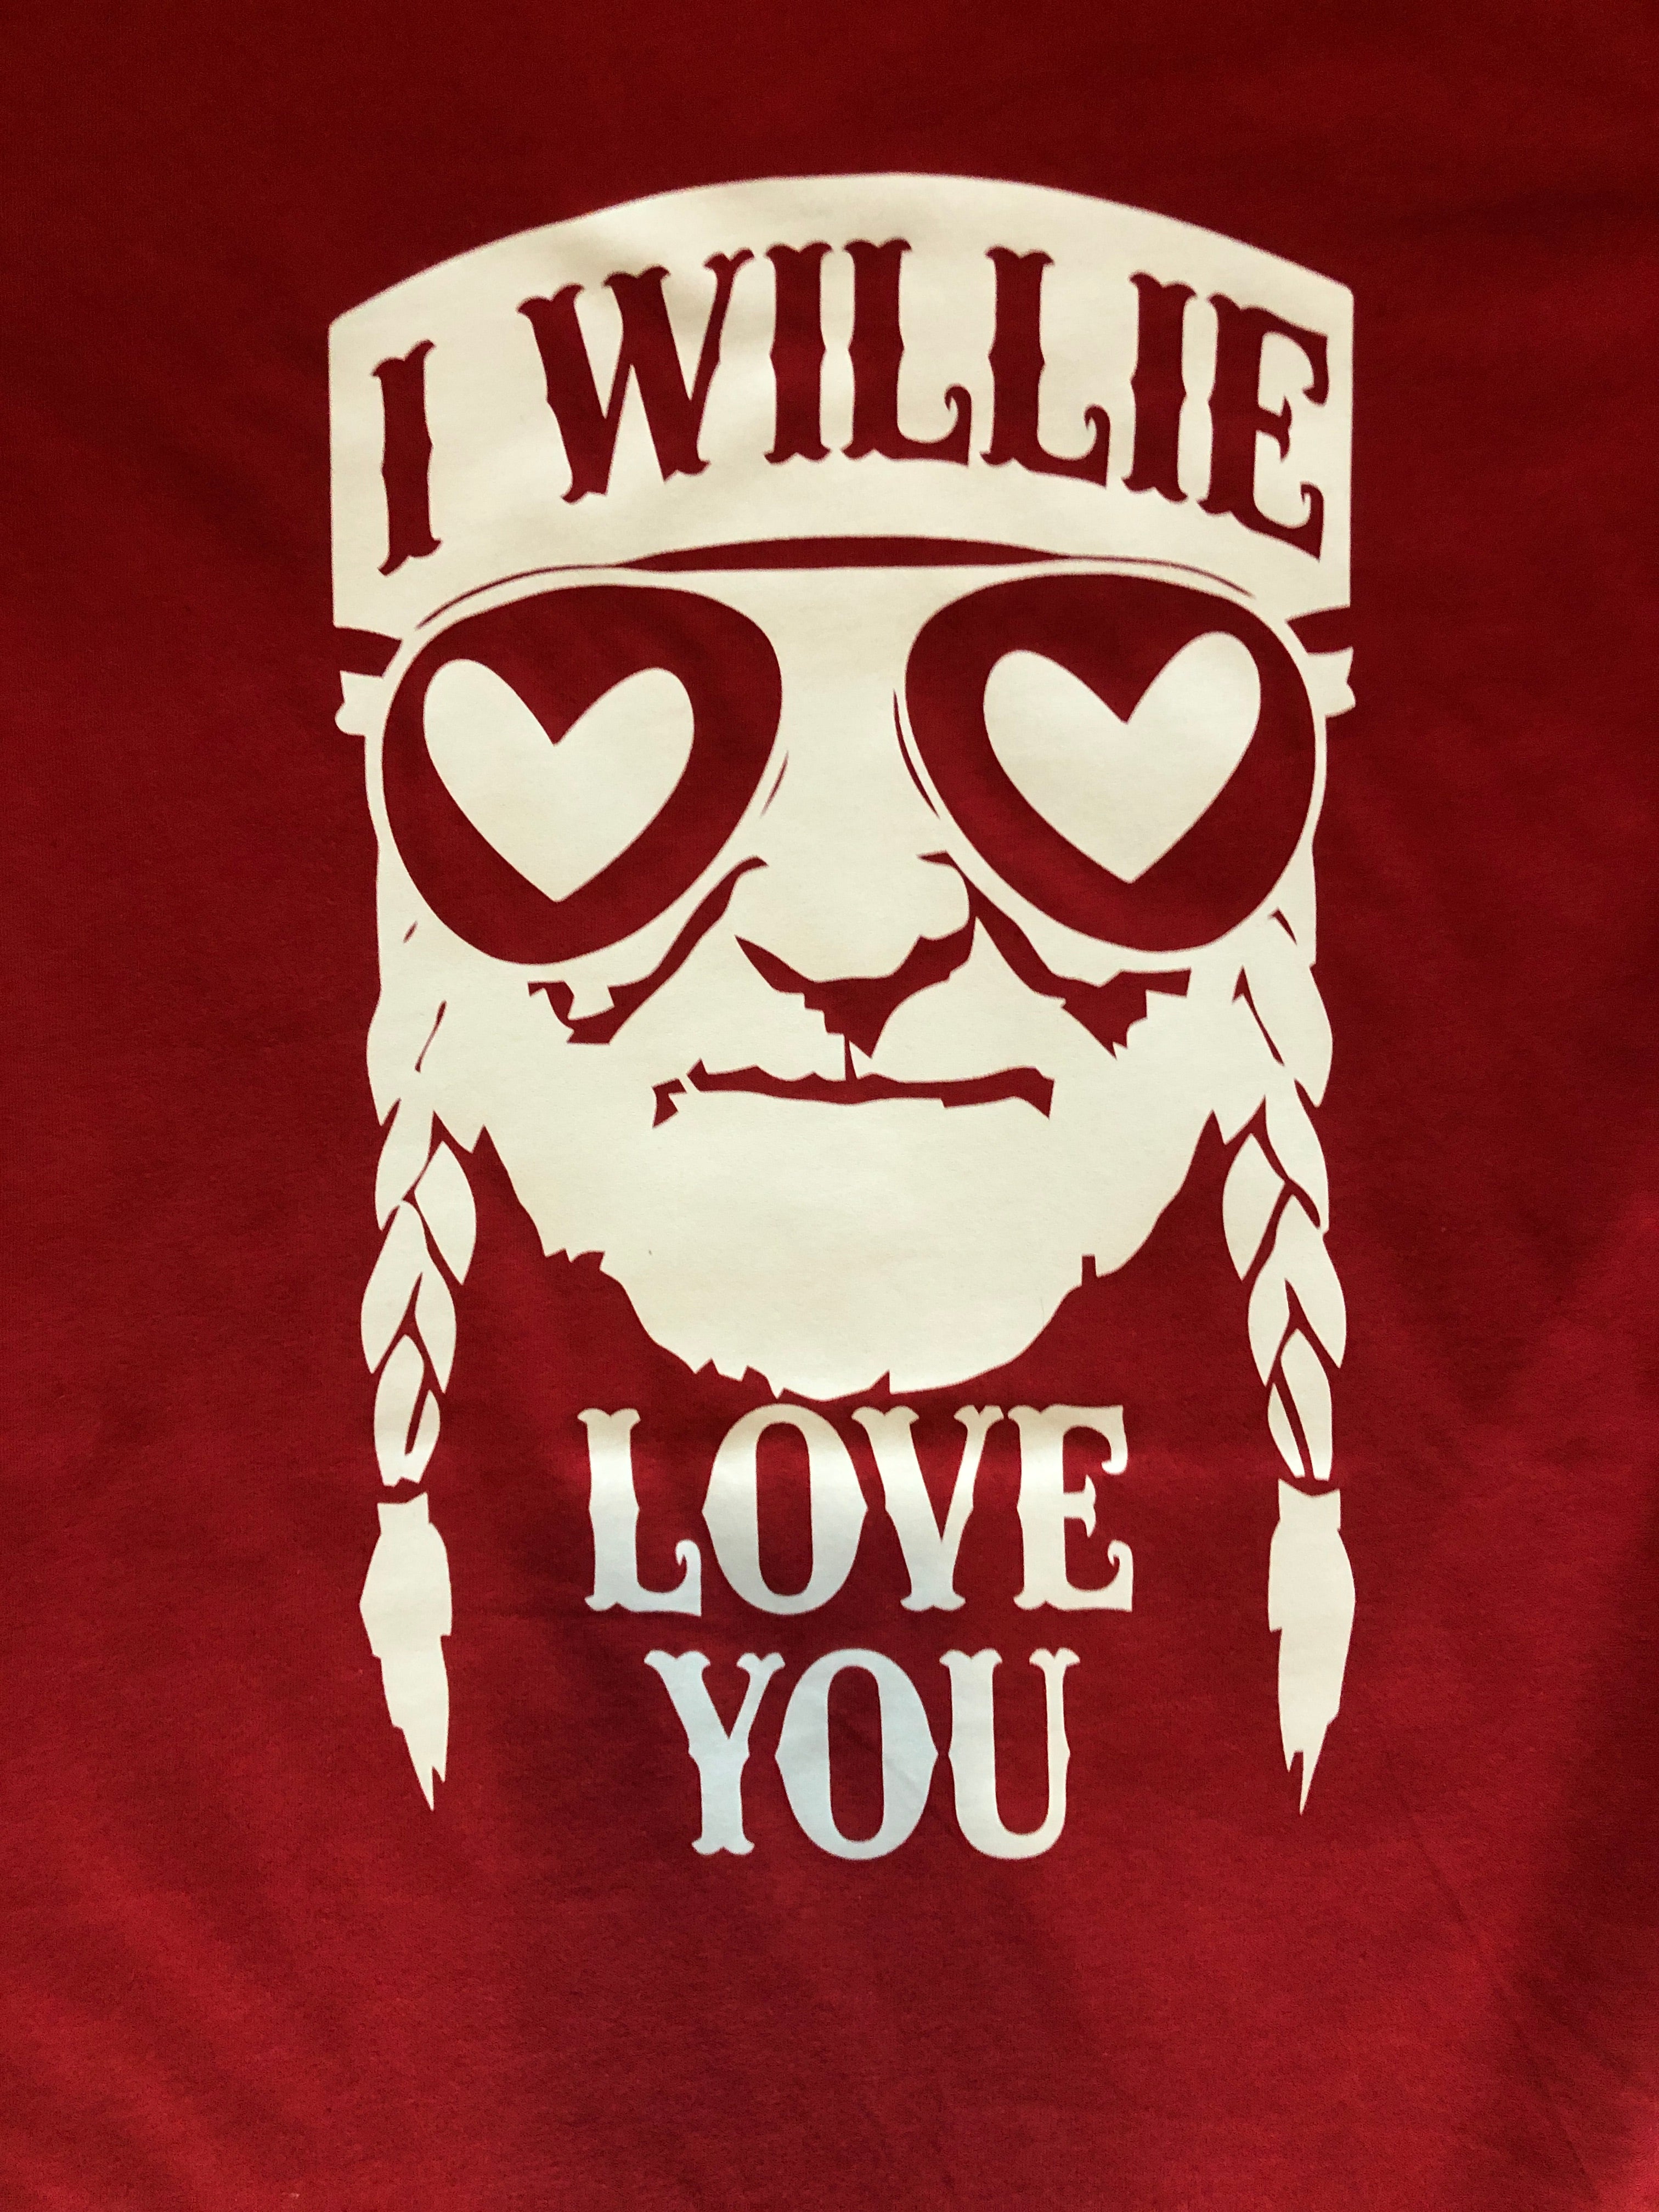 I Willie Love You Tee